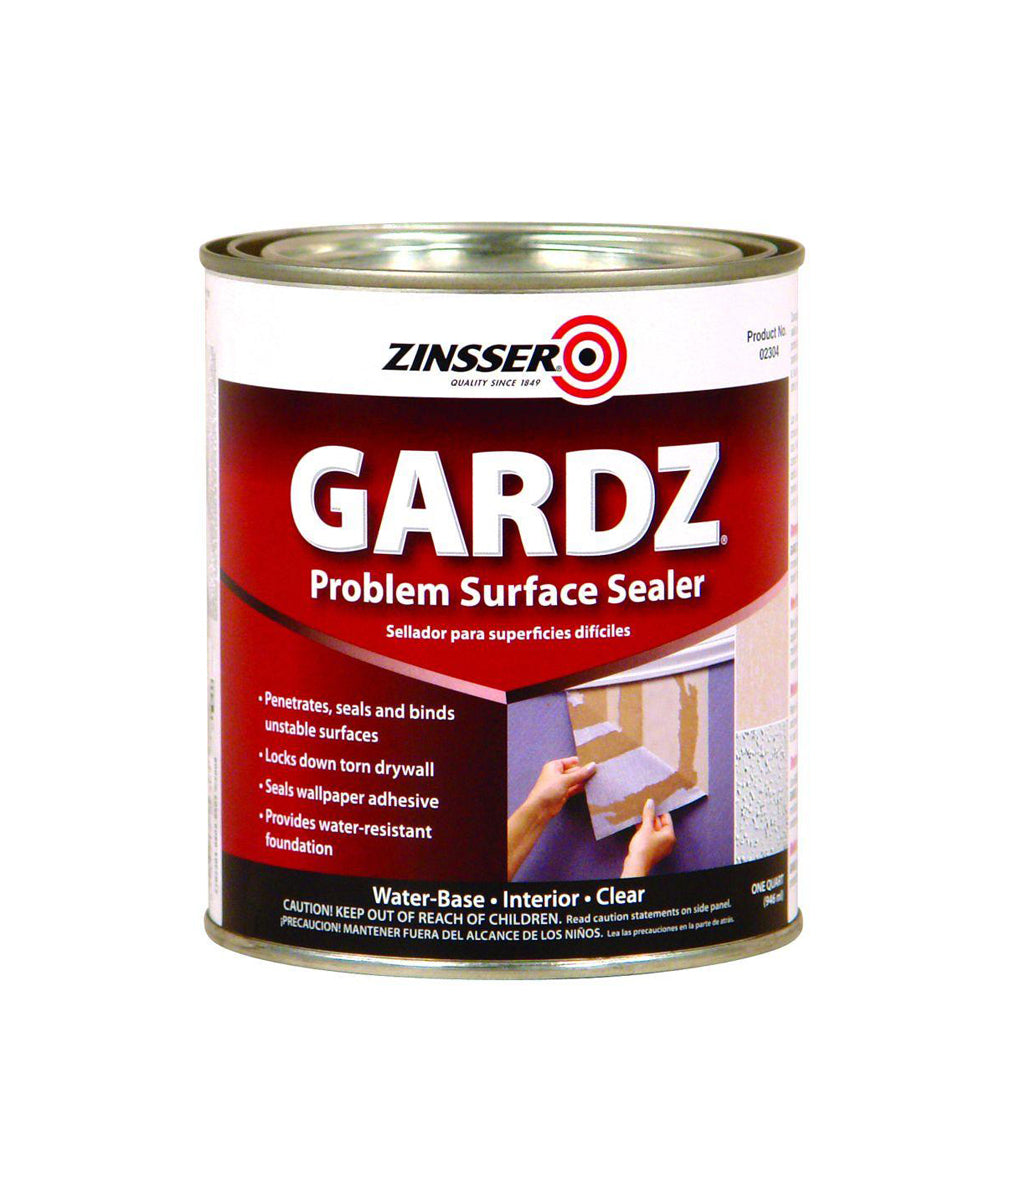 Zinsser Gardz sealer, available at Wallauer's in NY.